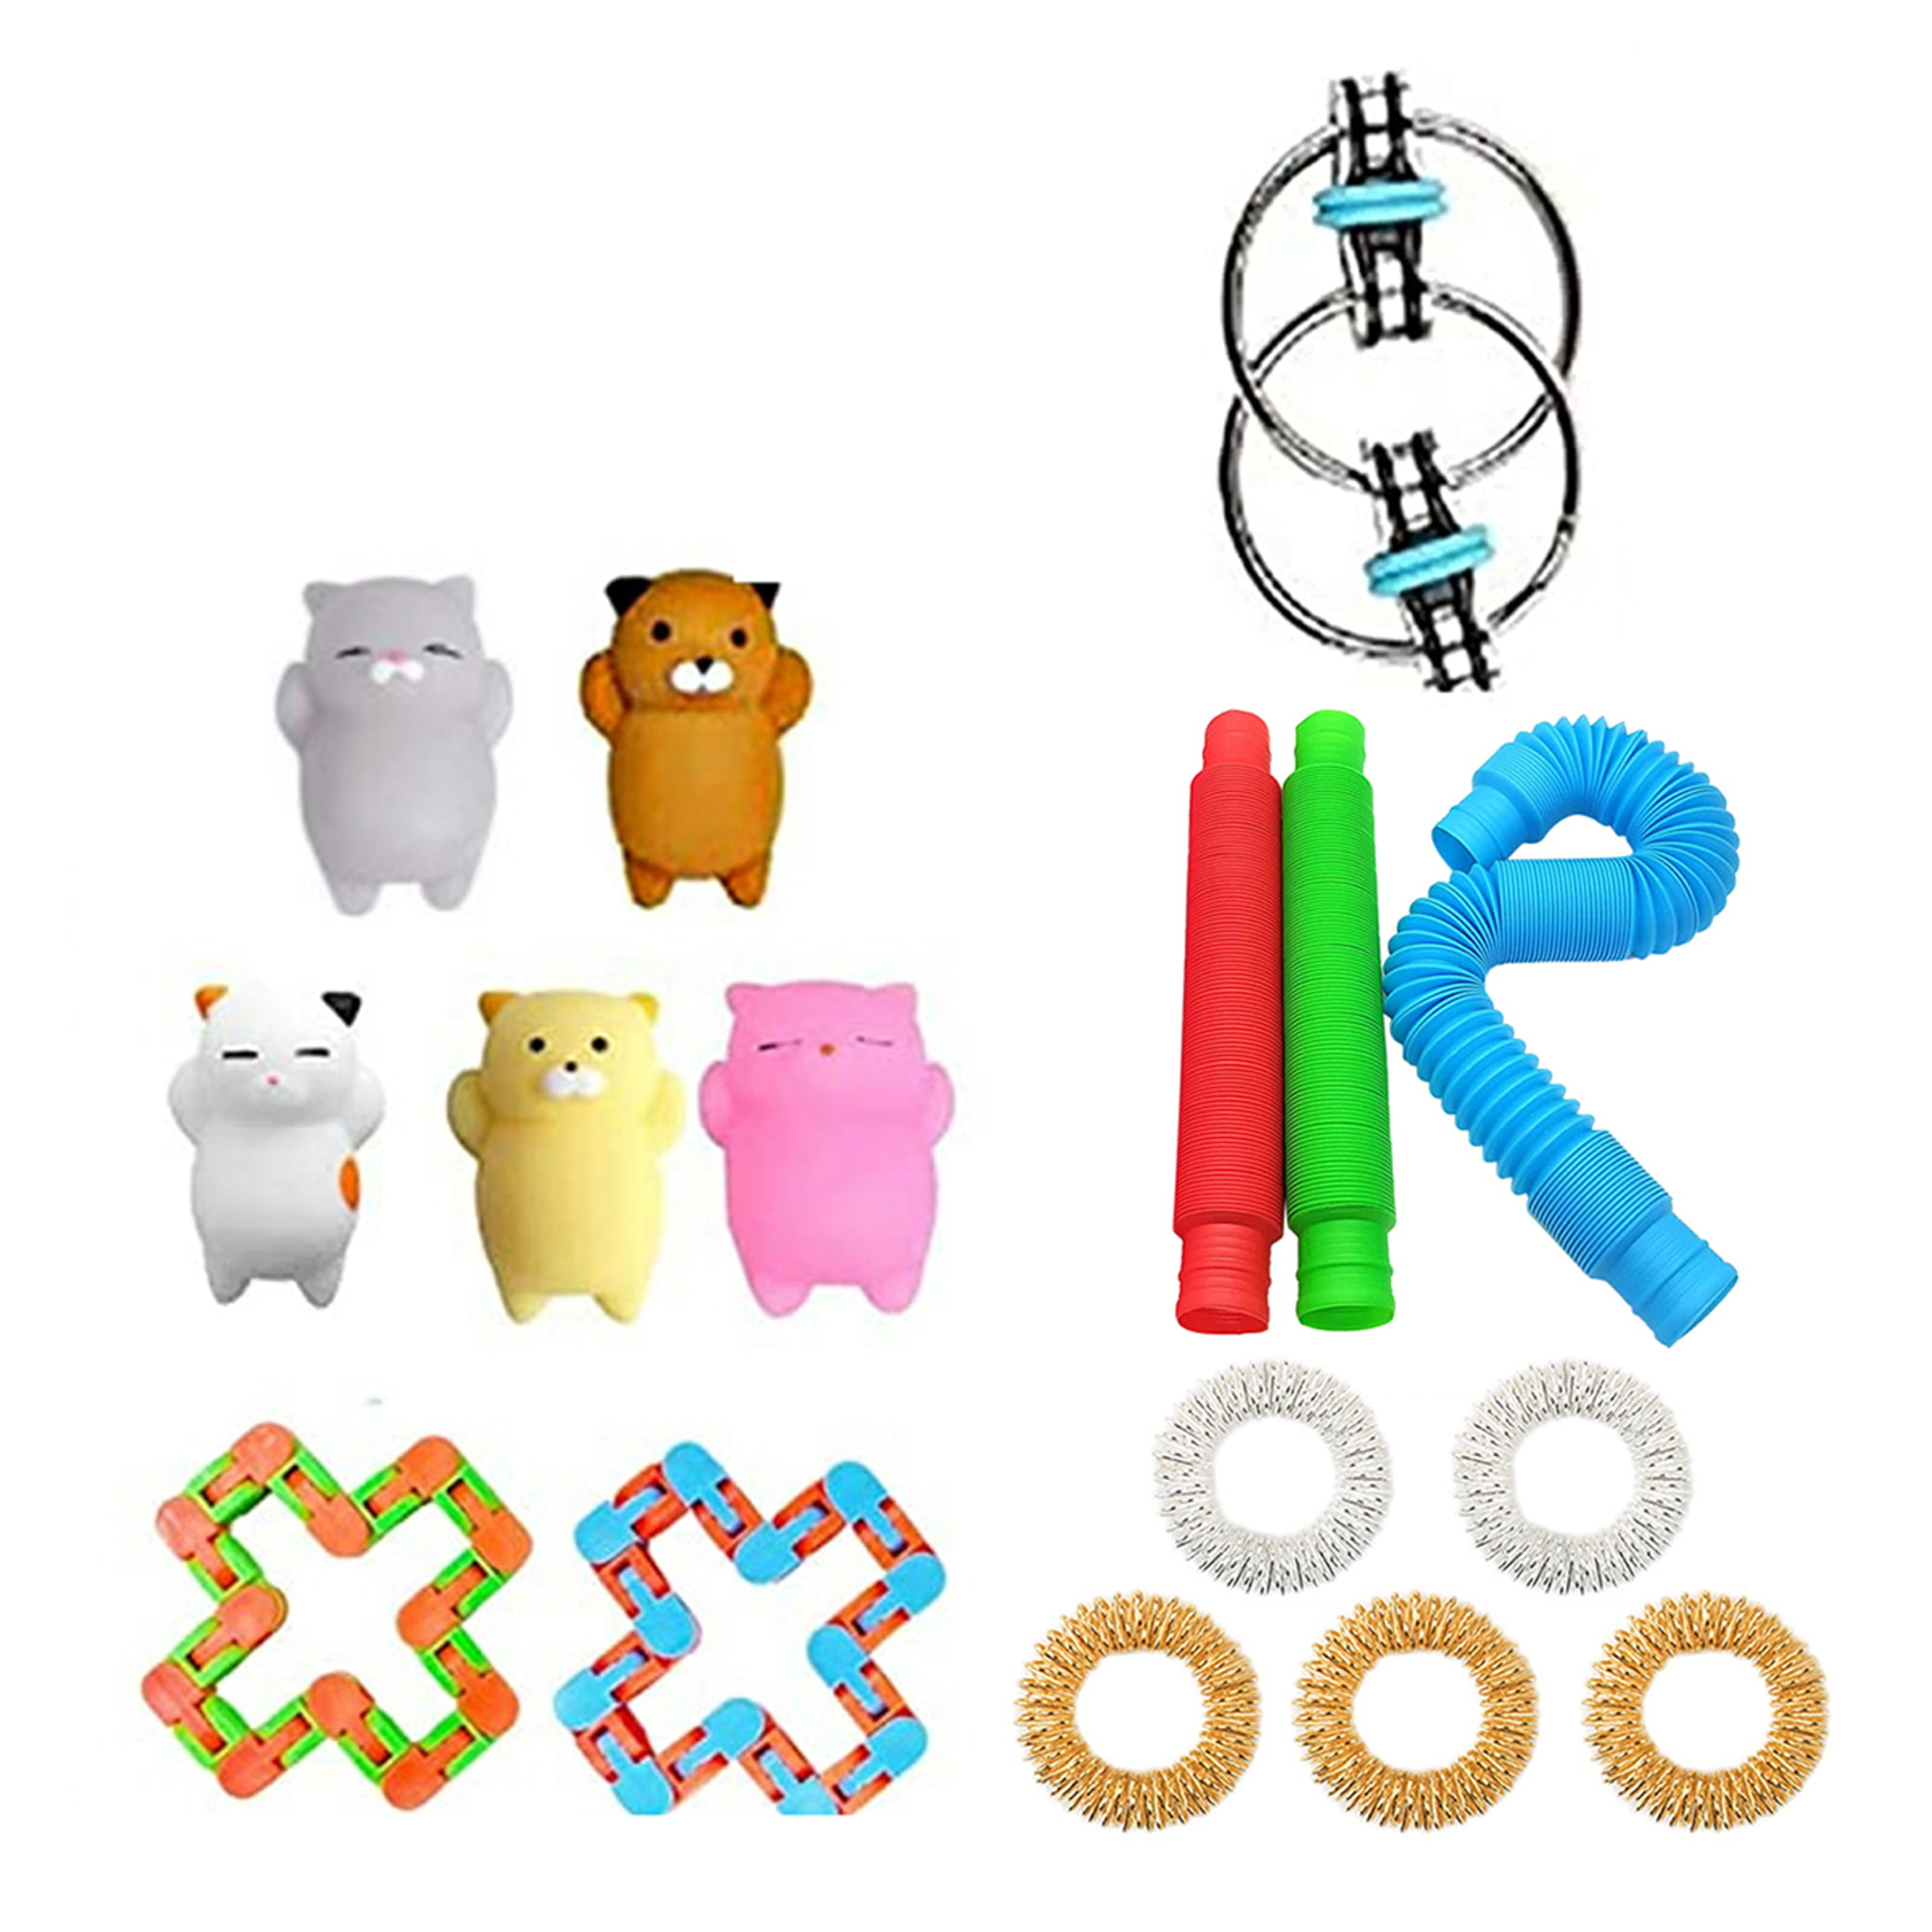 Details about   Sensory Fidget Toys Set Stress Relief Kits For Kids S Party Favors For Kids S 